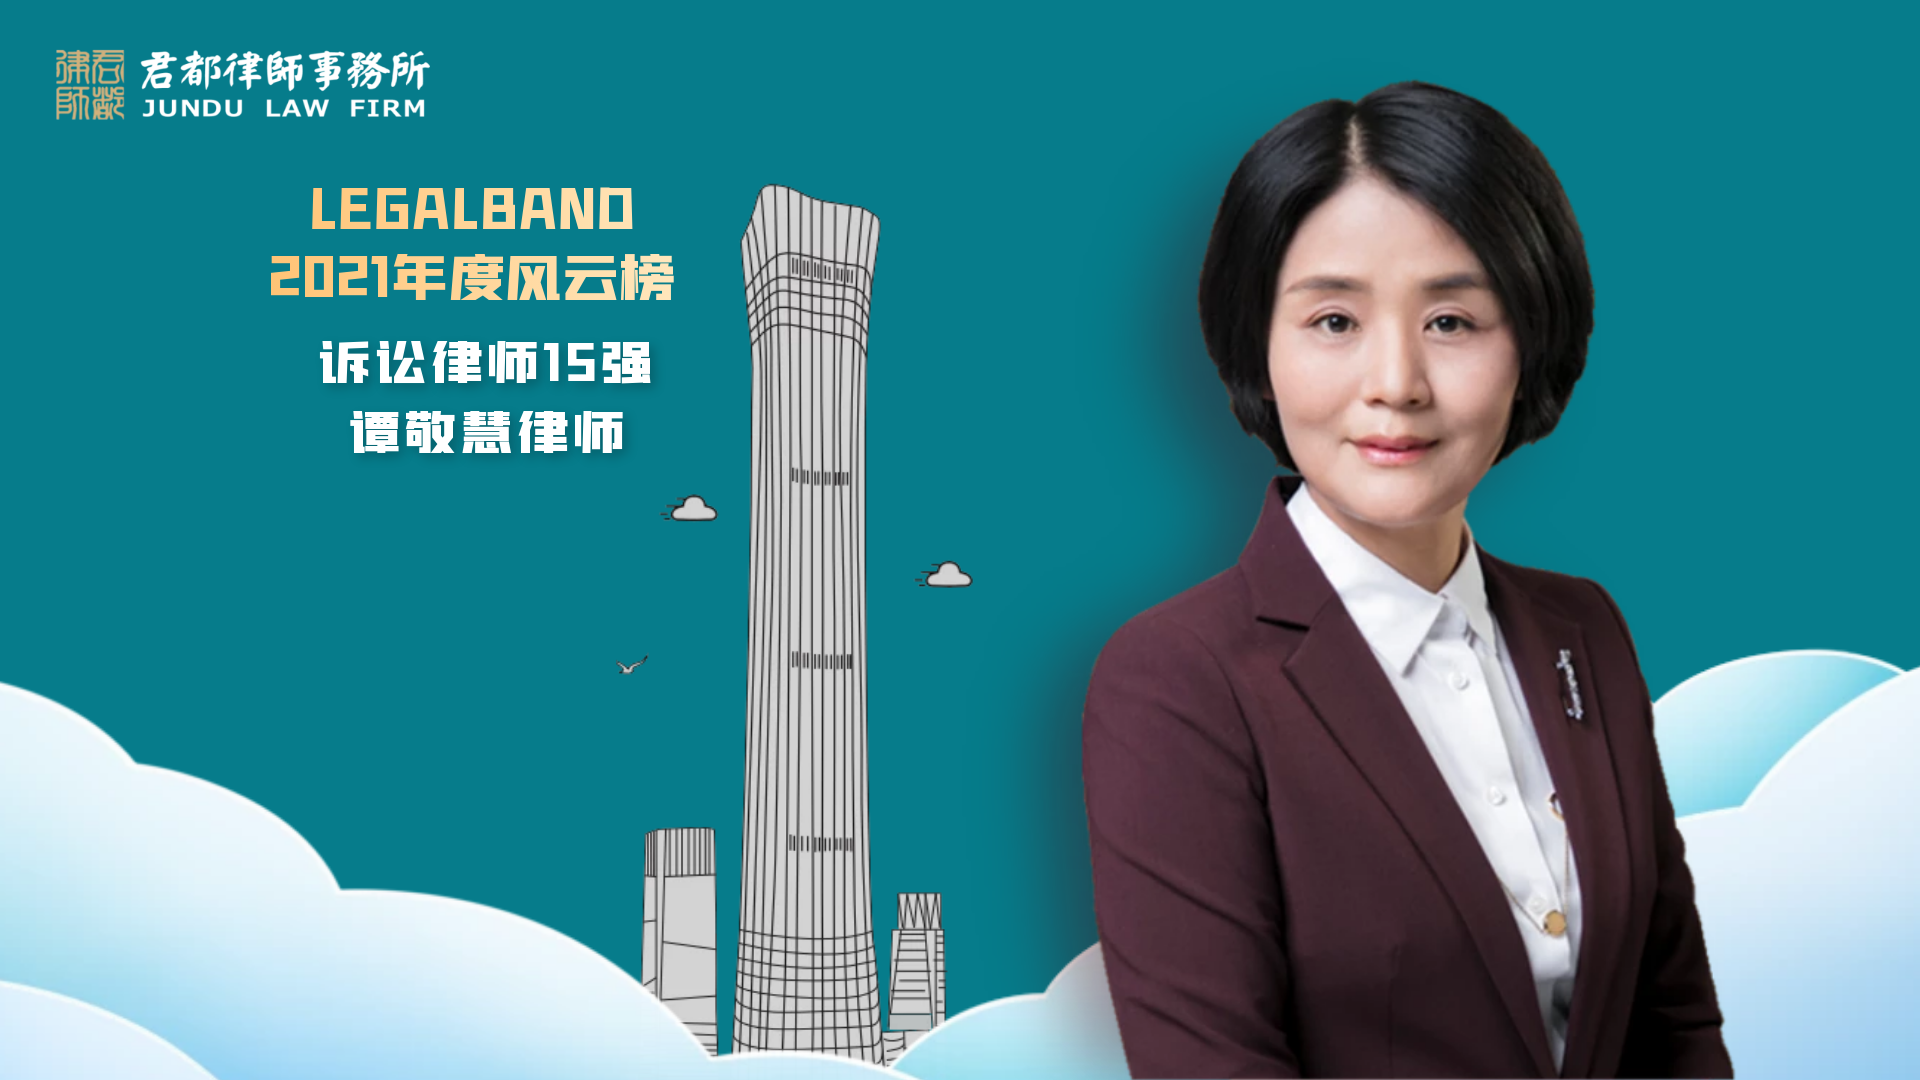 Mdm Tan Jinghui of Jundu Law Firm ranked as one of the Top 15 Litigator in China